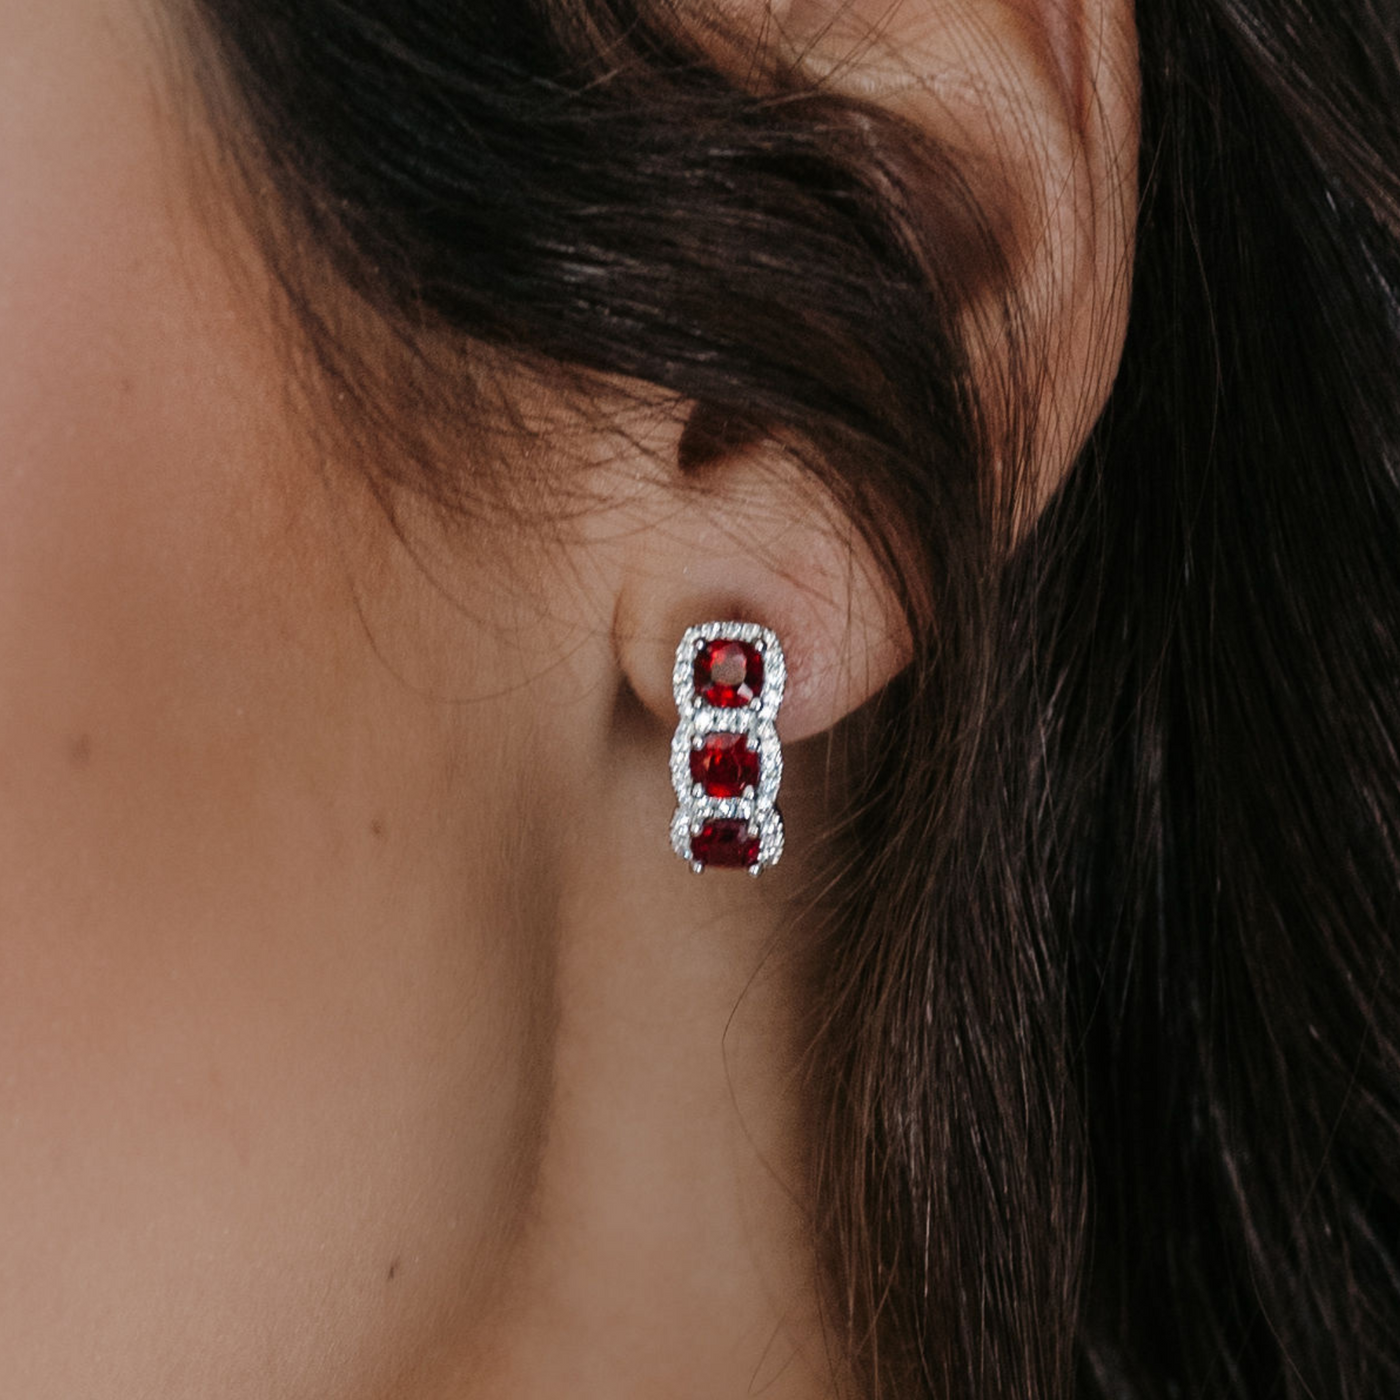 ruby and diamond halo earrings